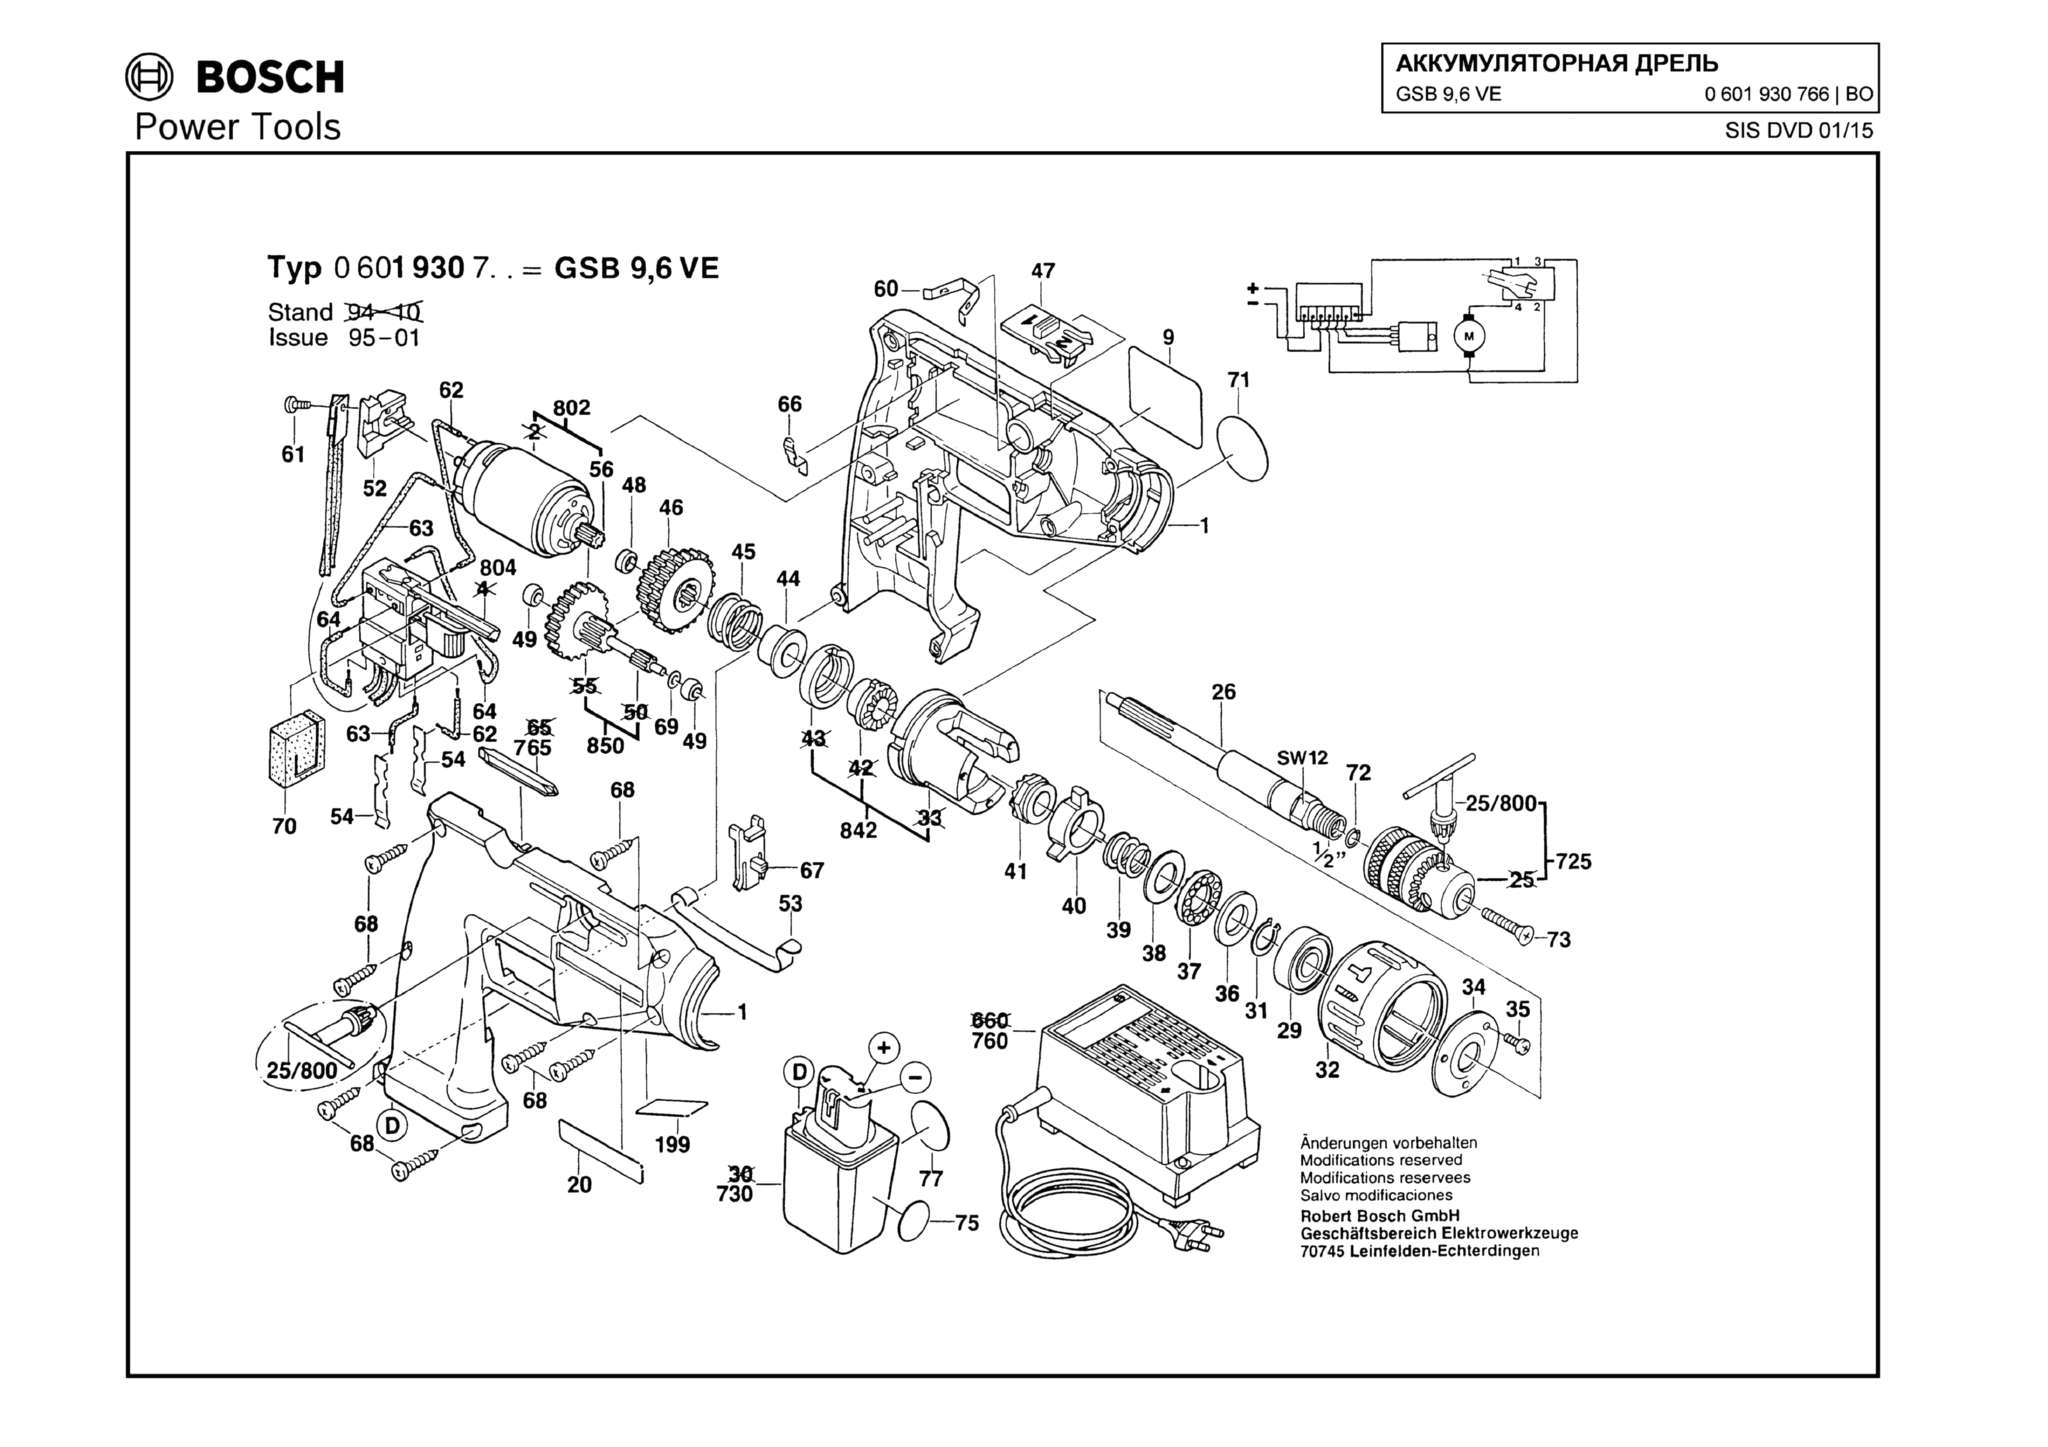 Запчасти, схема и деталировка Bosch GSB 9,6 VE (ТИП 0601930766)